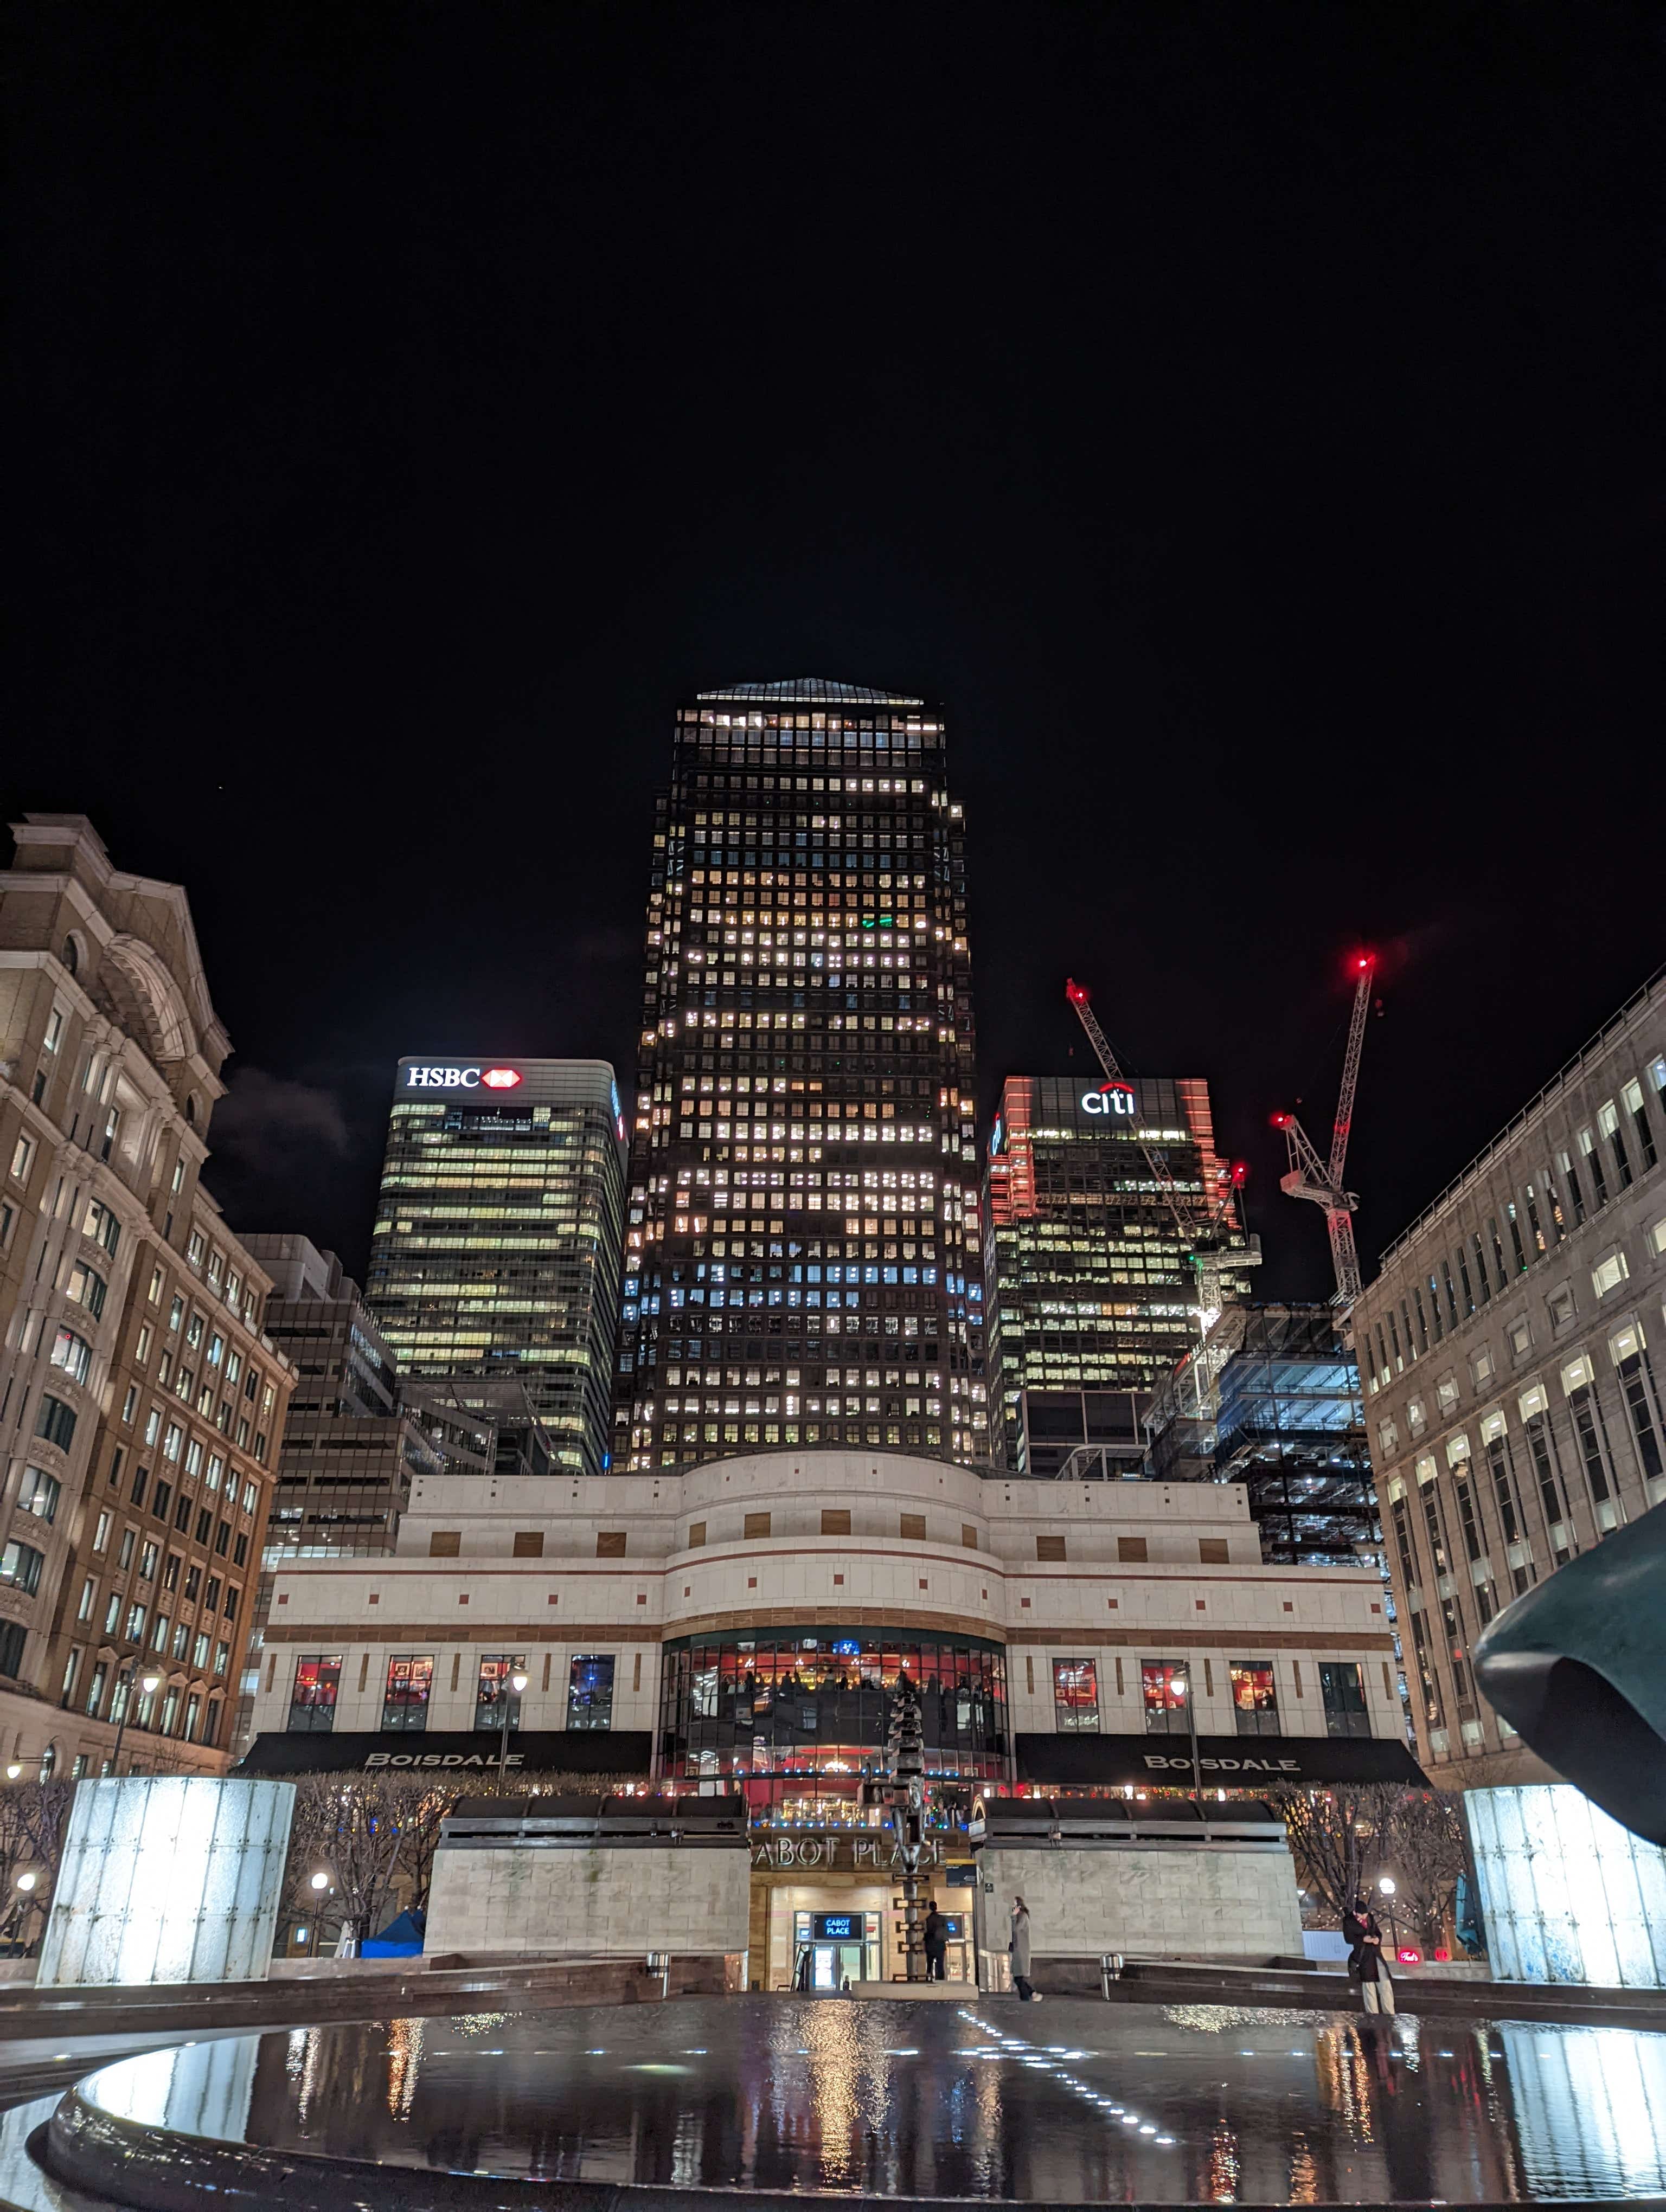 Google Pixel 6 Pro night sight shot of Canary Wharf